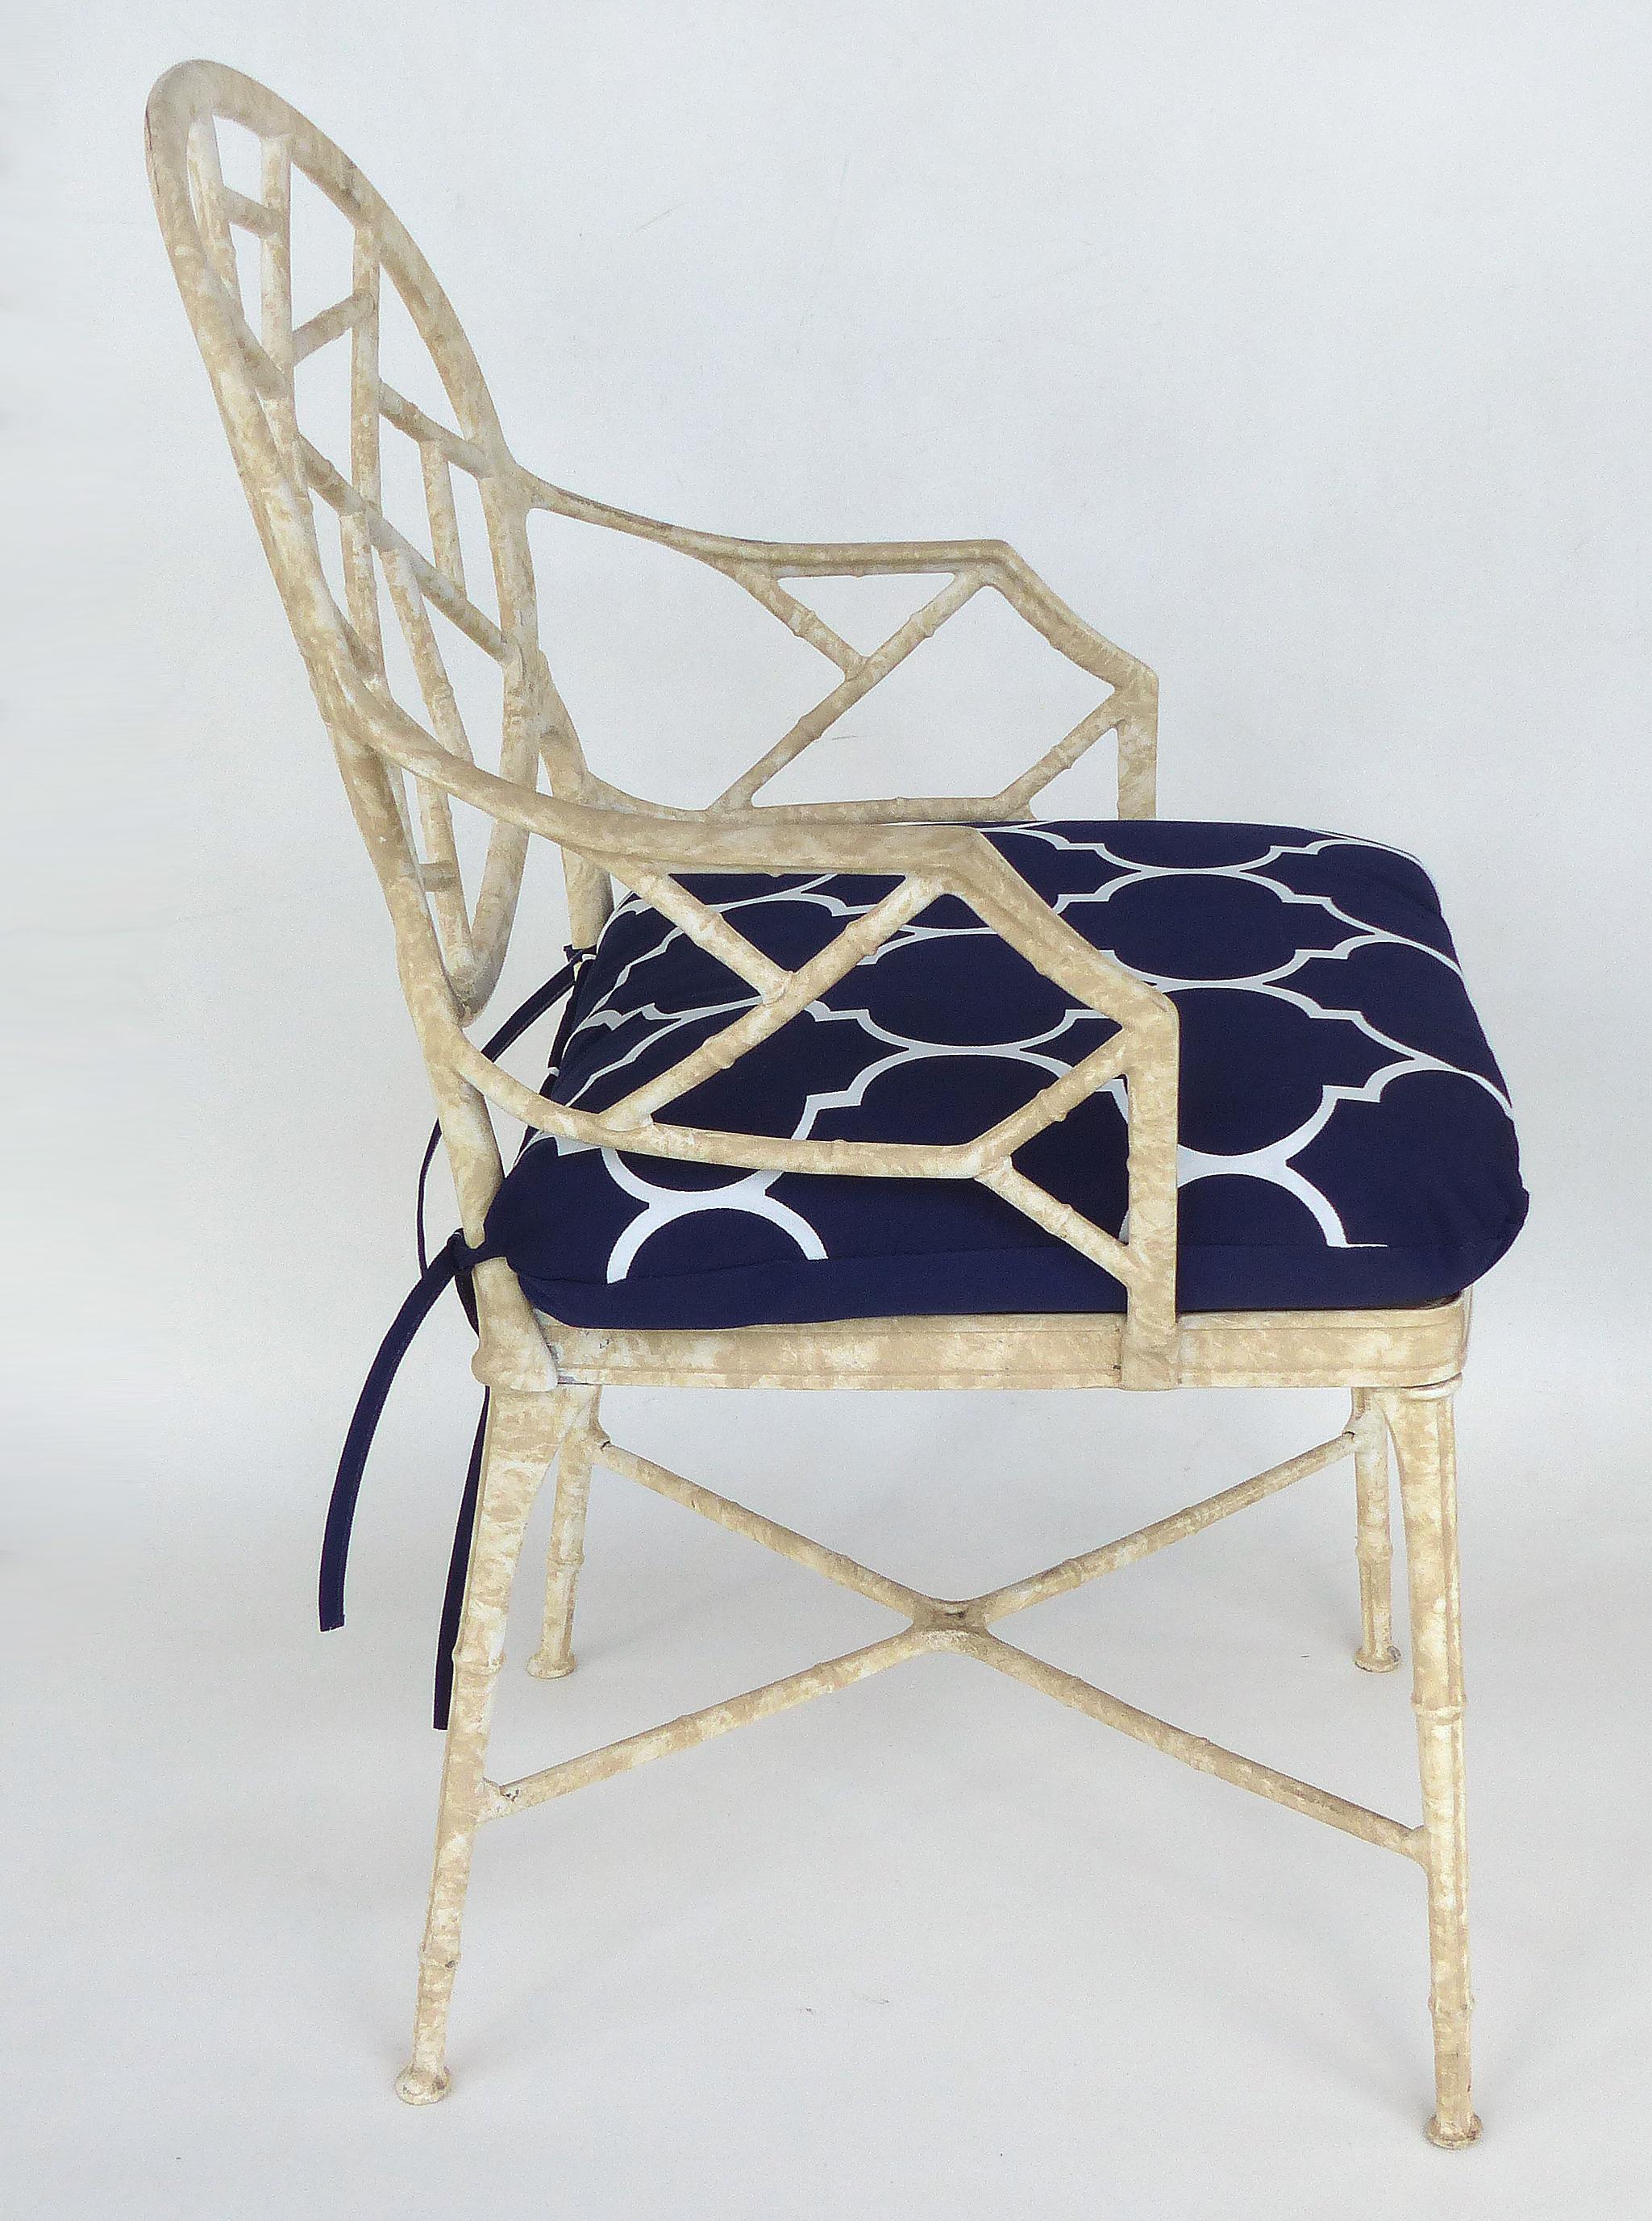 Cast Aluminium Lattice Motif Garden Chairs with Loose Seat Cushions, Set of 4